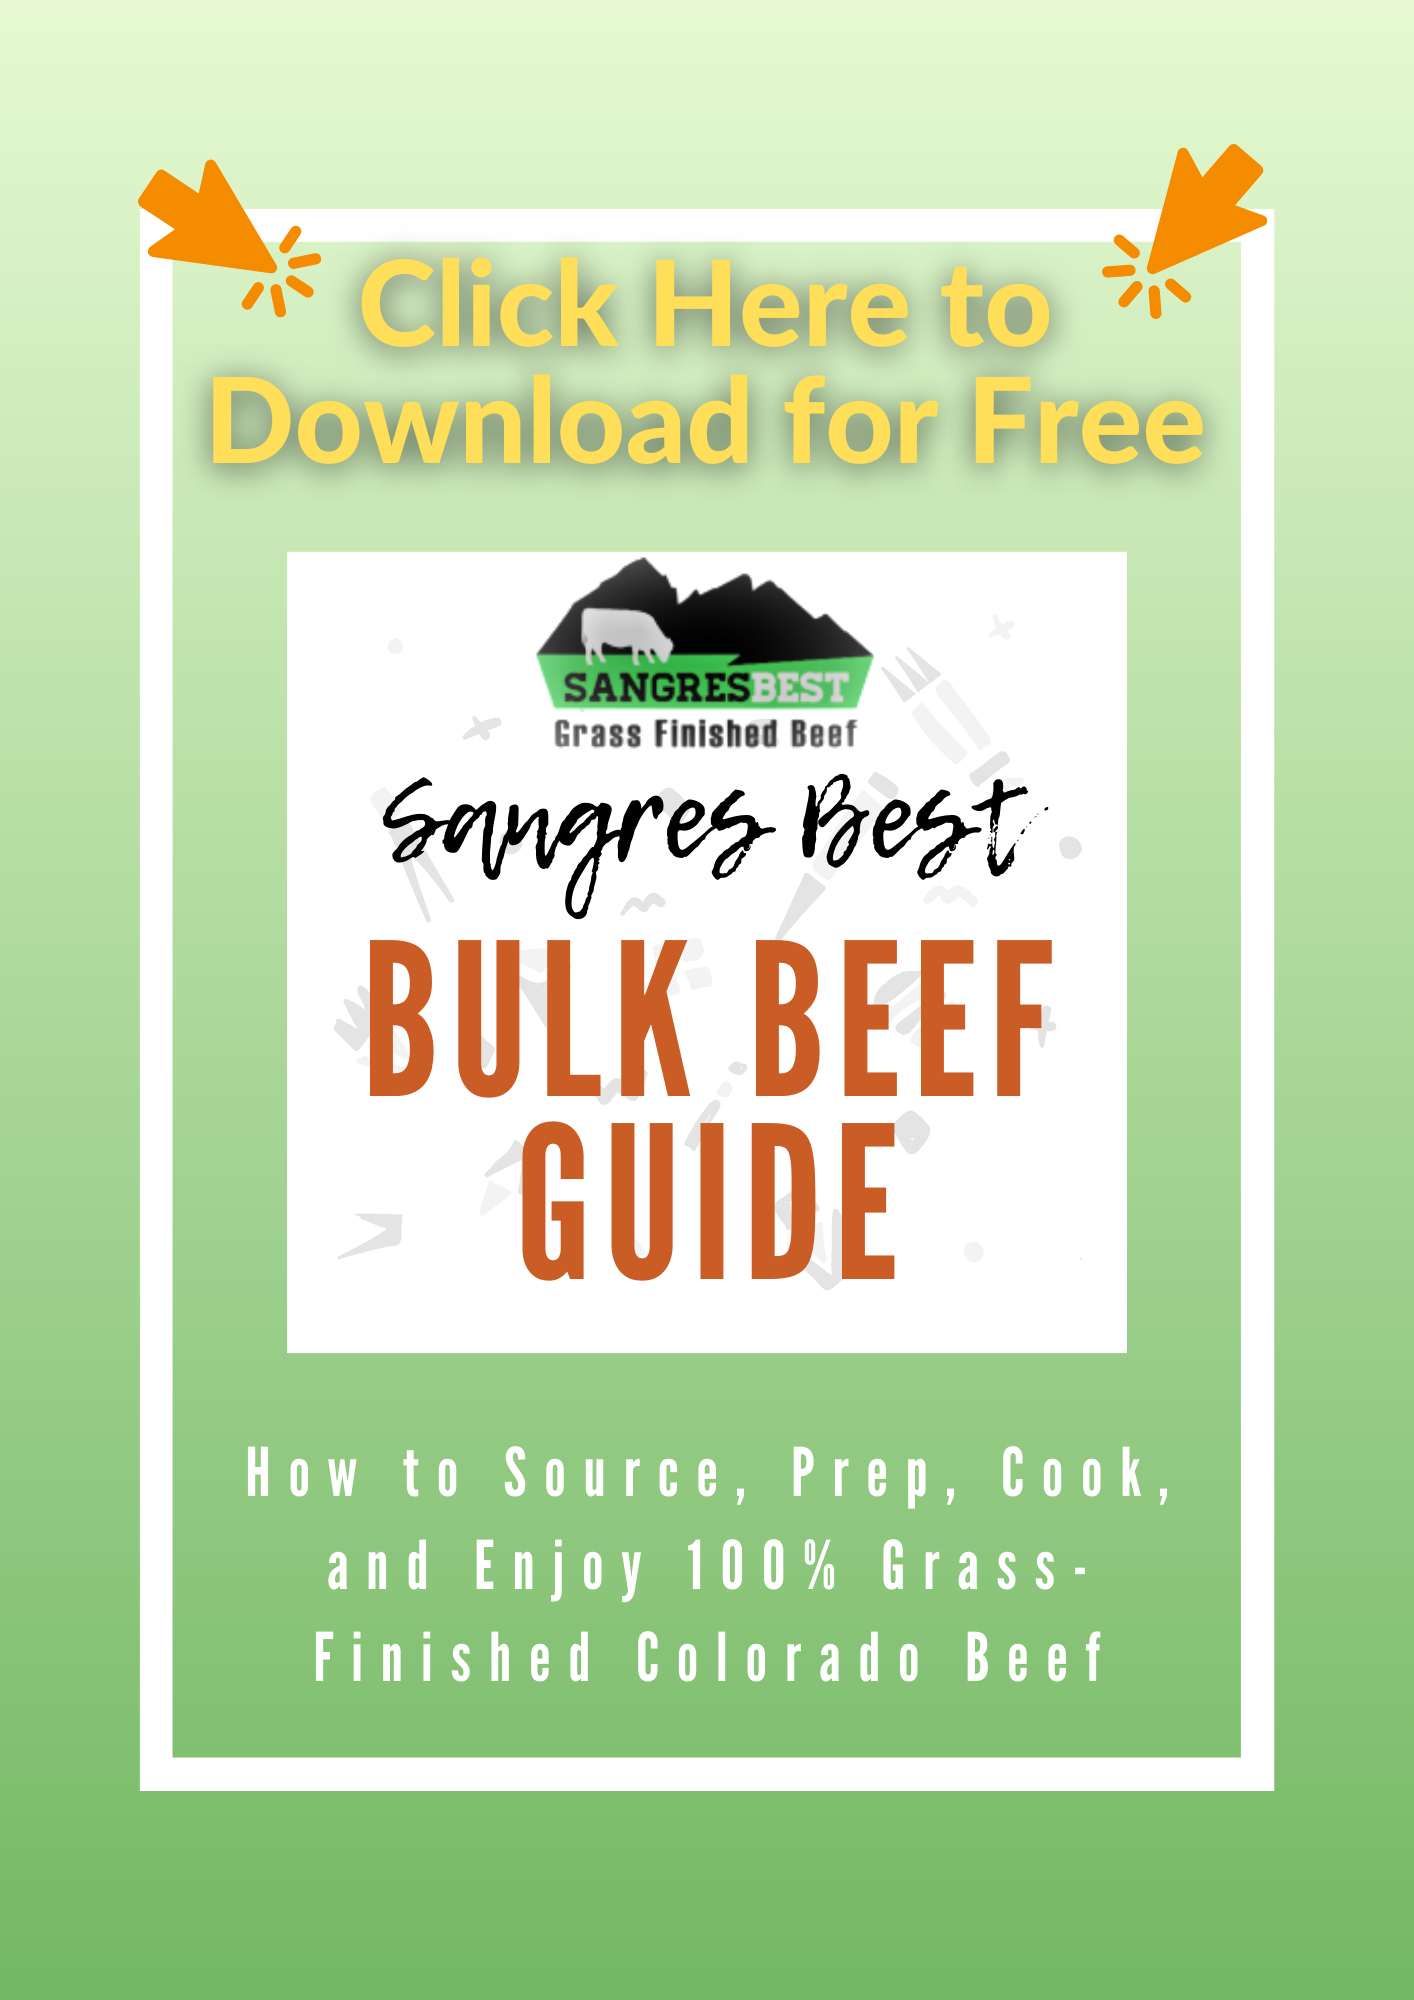 Official Bulk Beef Guide